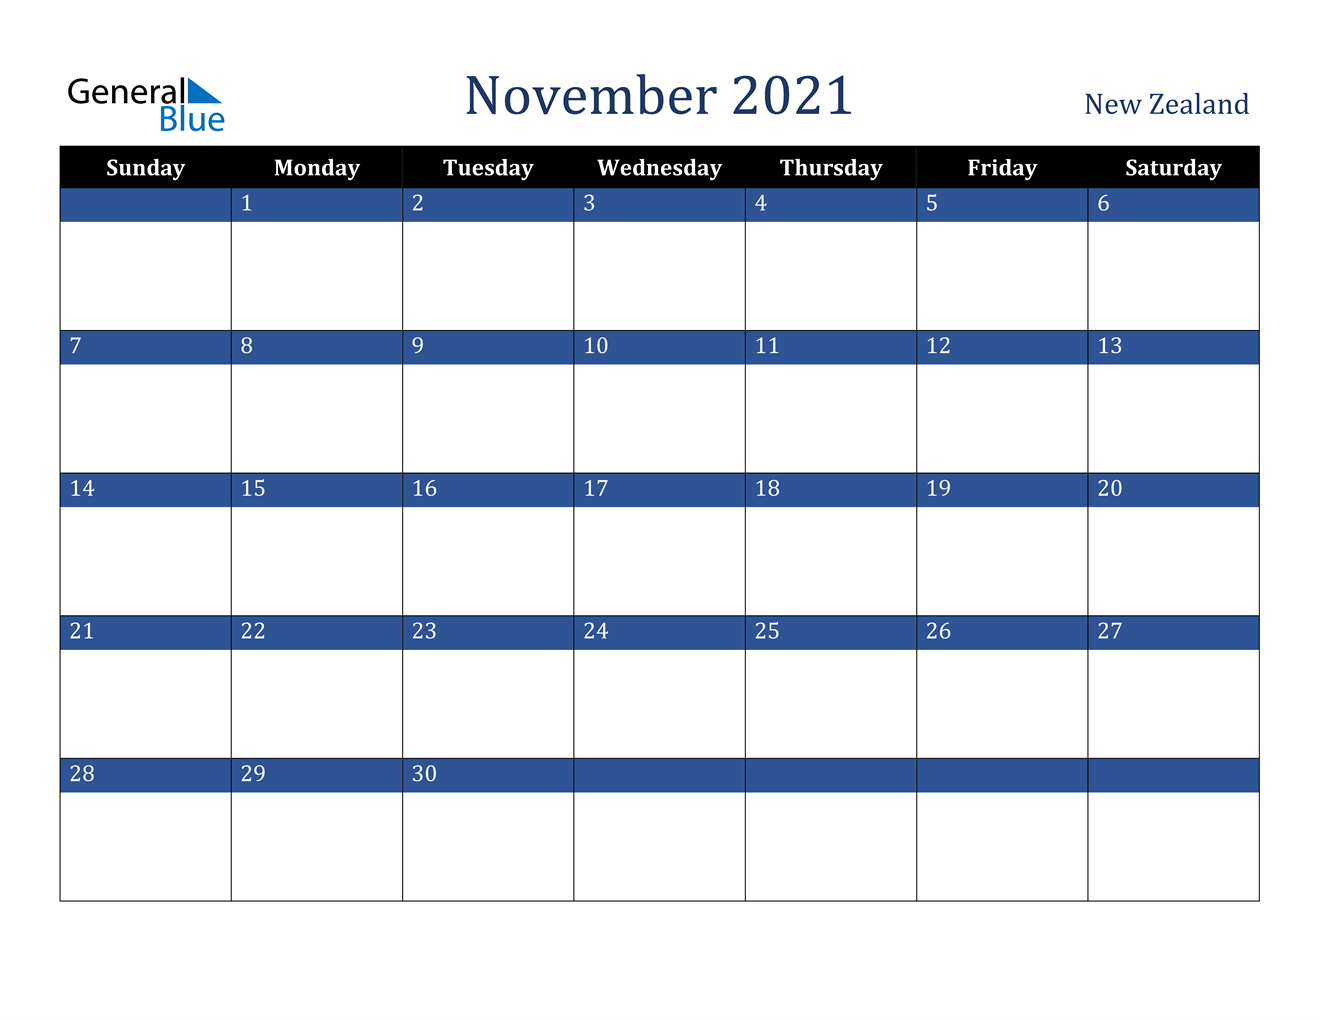 November 2021 Calendar - New Zealand